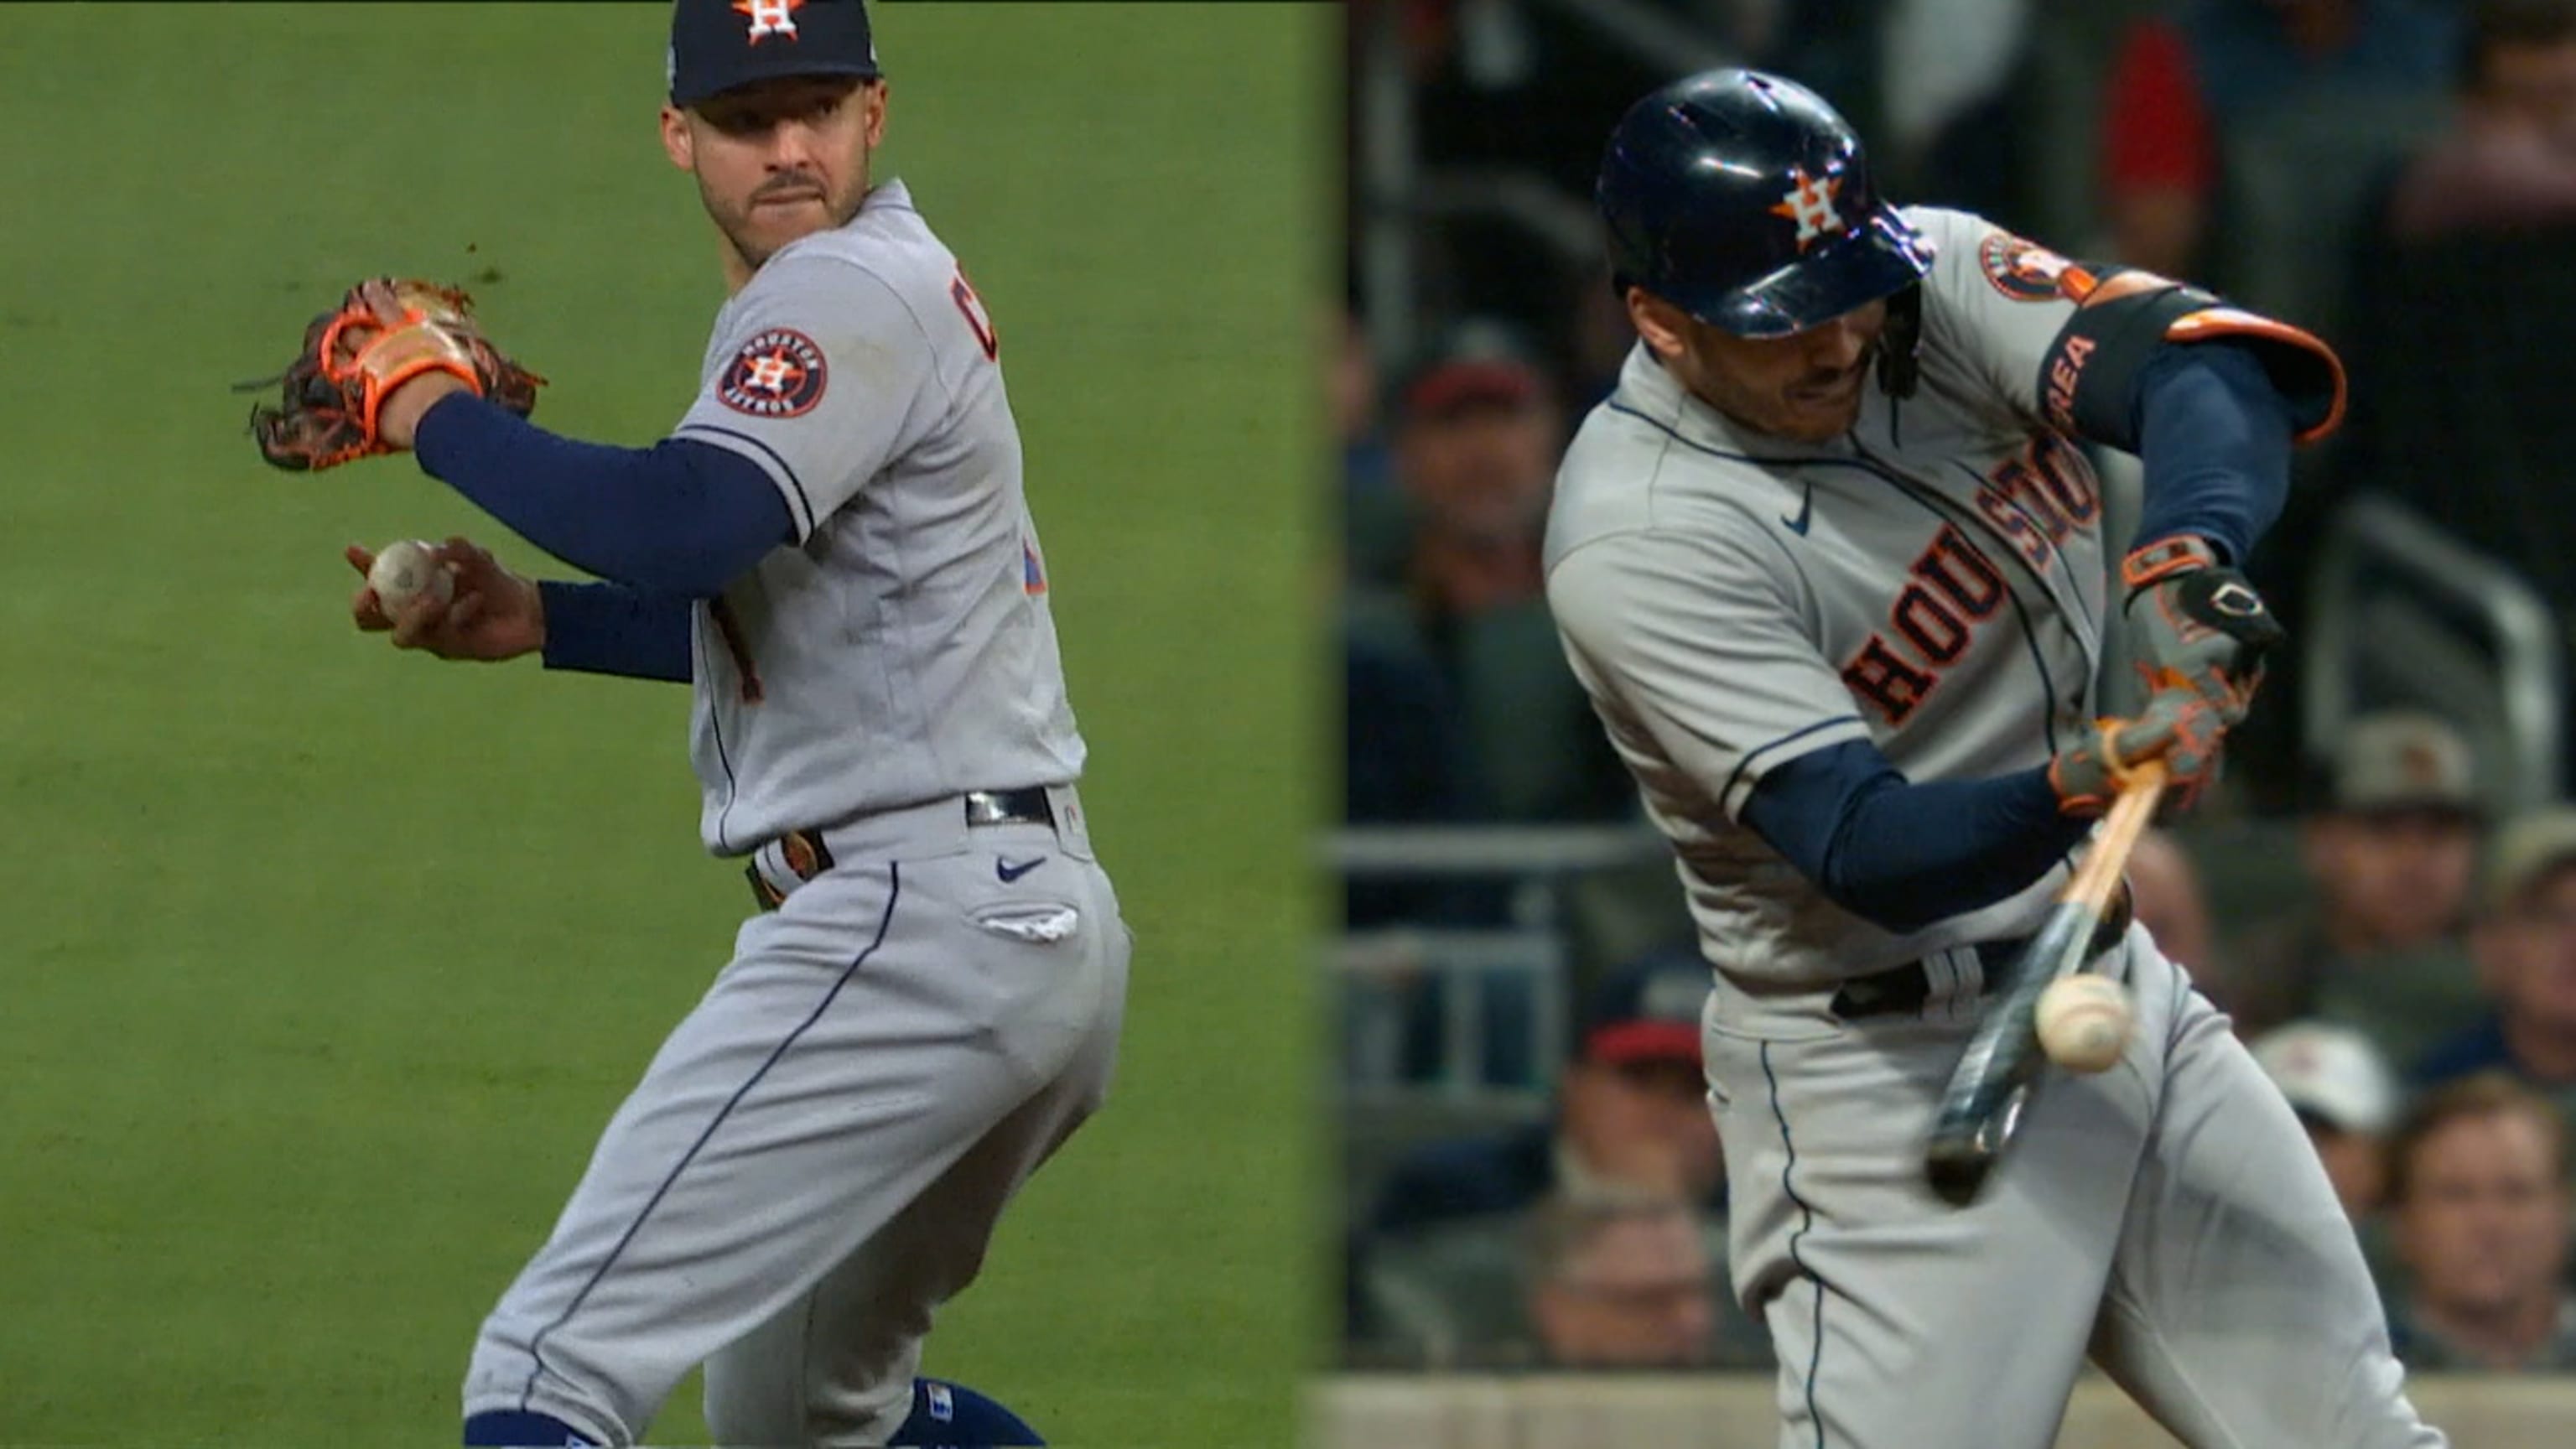 World Series: Altuve, Bregman and Gurriel Set Tone for Astros